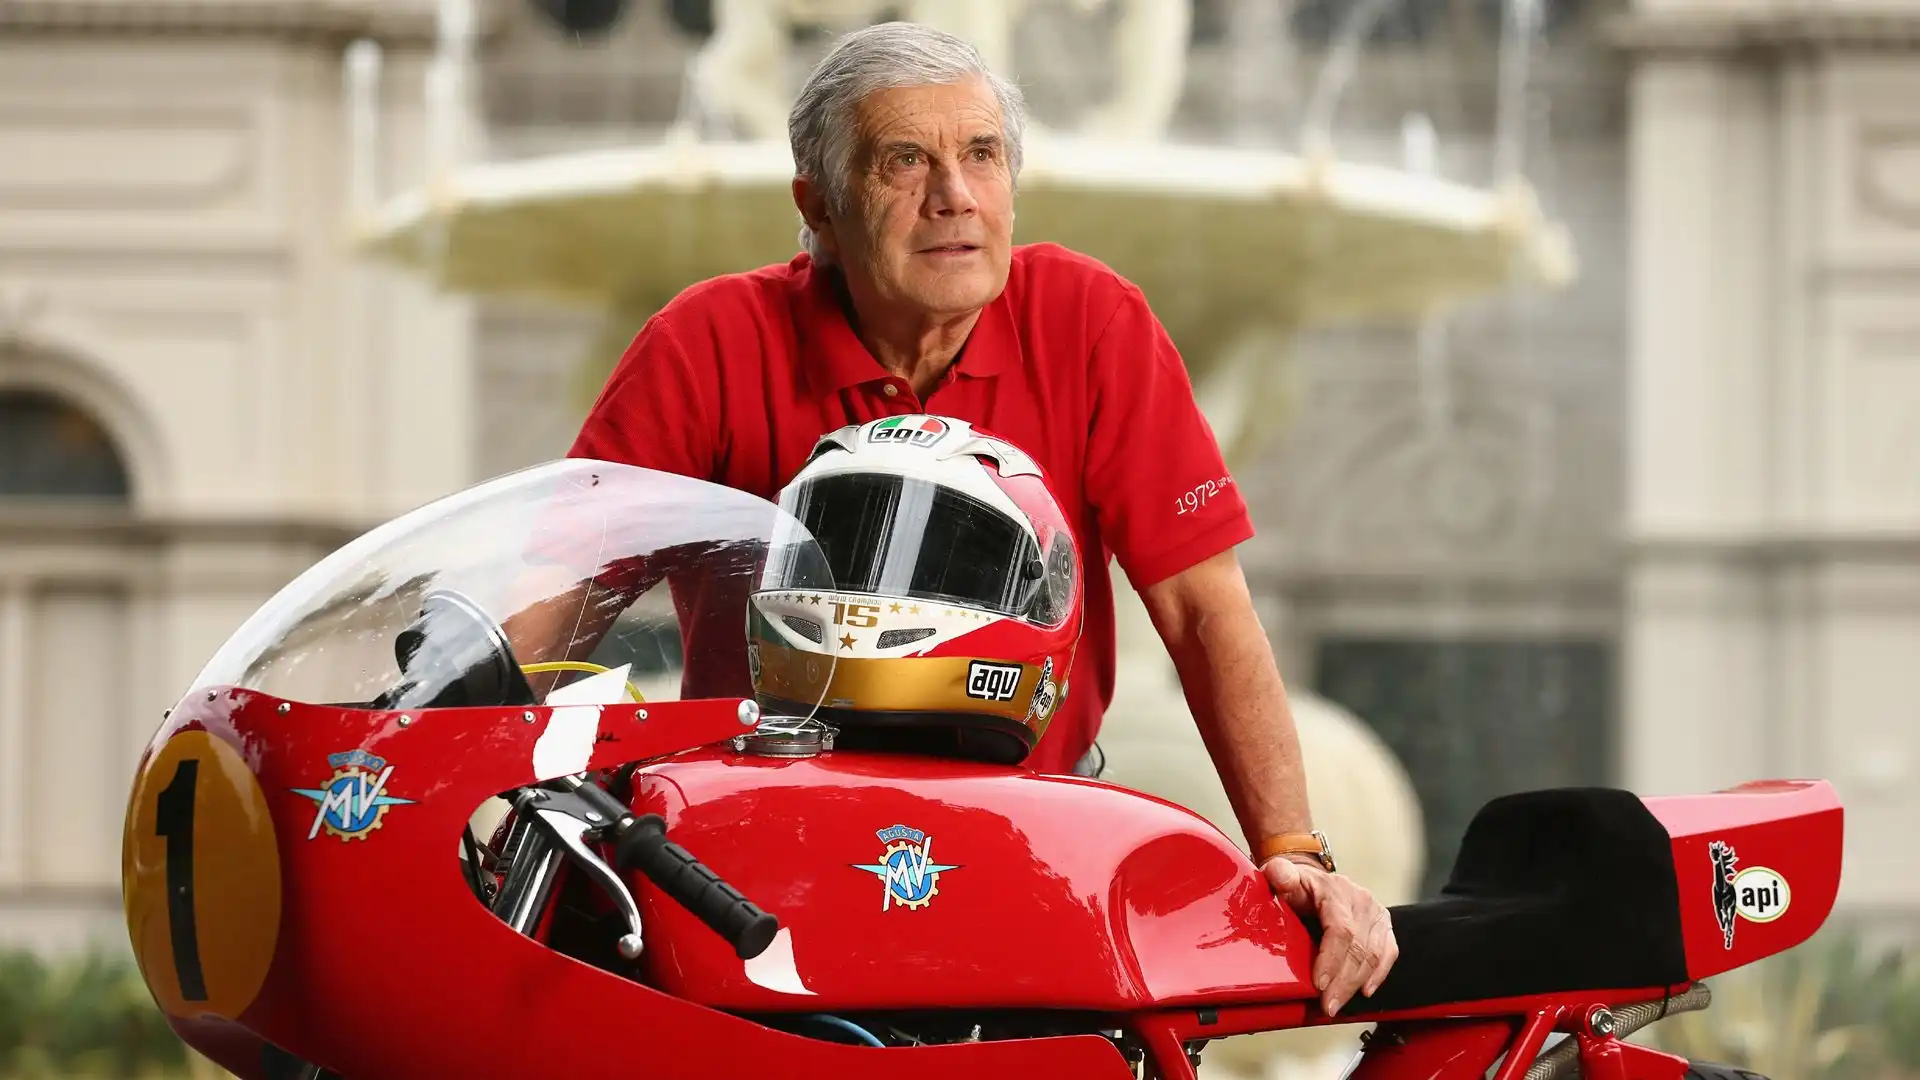 Giacomo Agostini con la MV Agusta 500